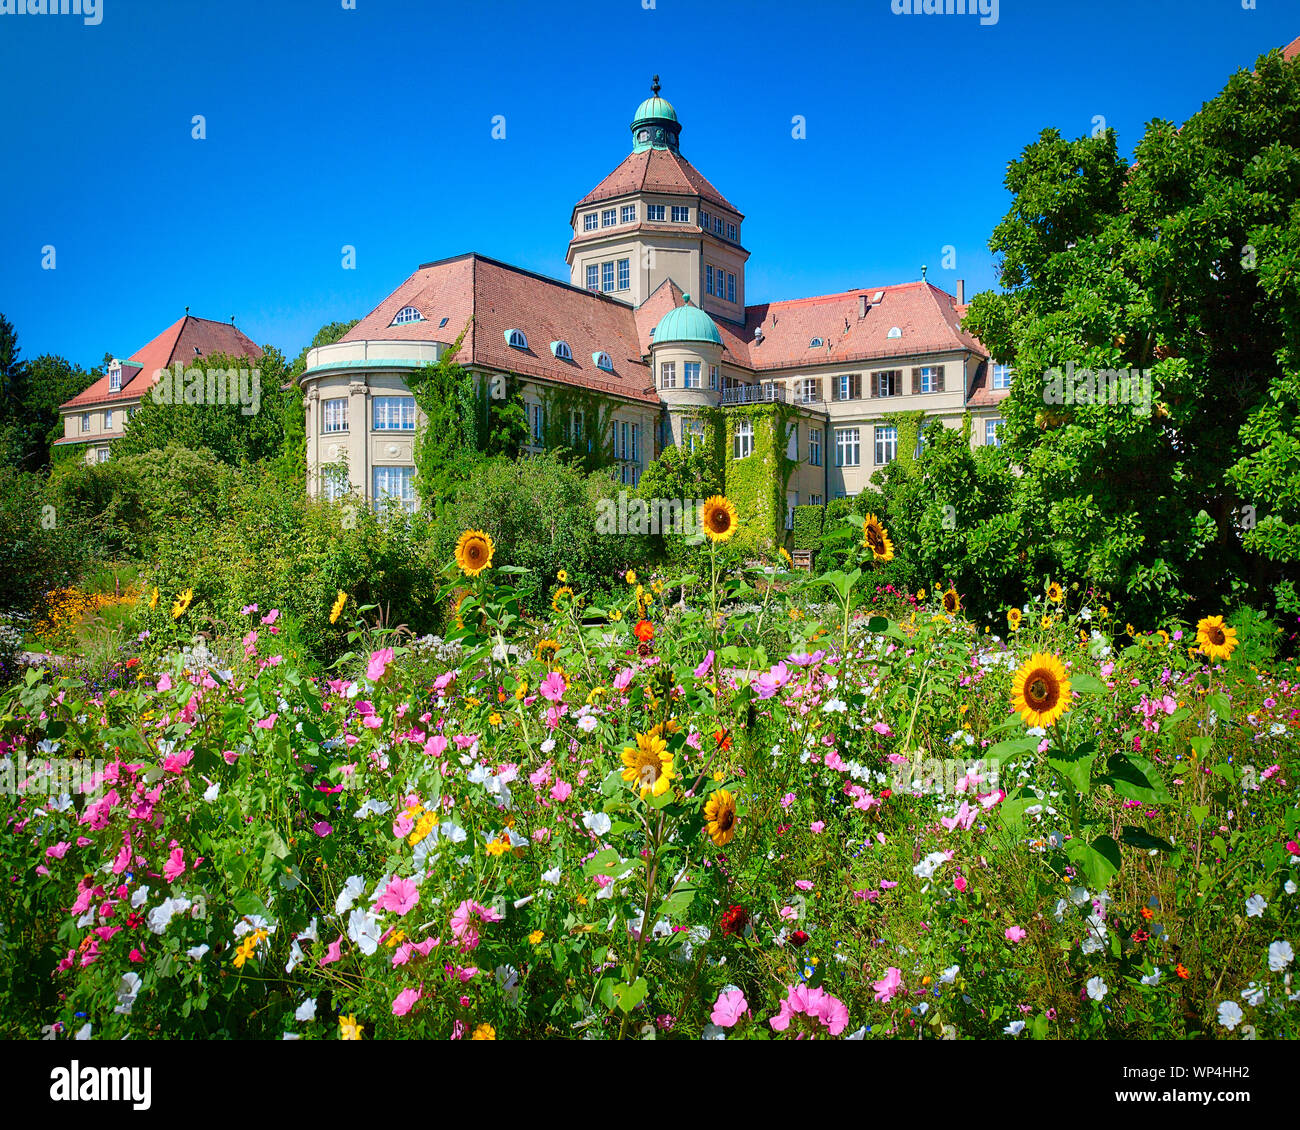 DE - BAVARIA: The Botanical Garden and Botanical Institute at Munich (HDR-Image) Stock Photo